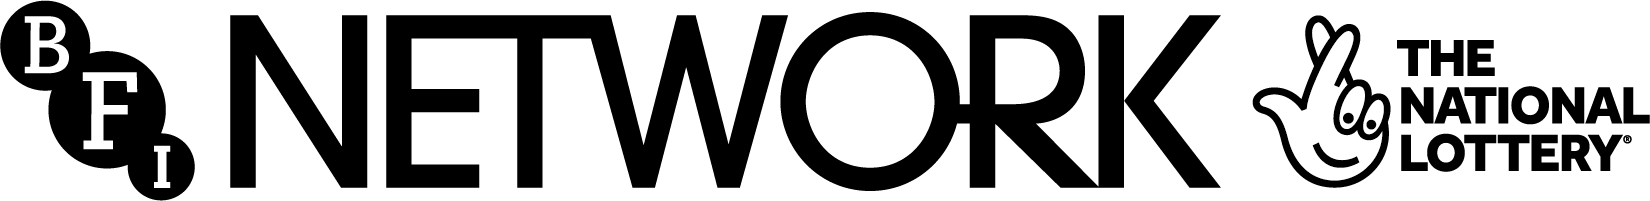 bfi network logo